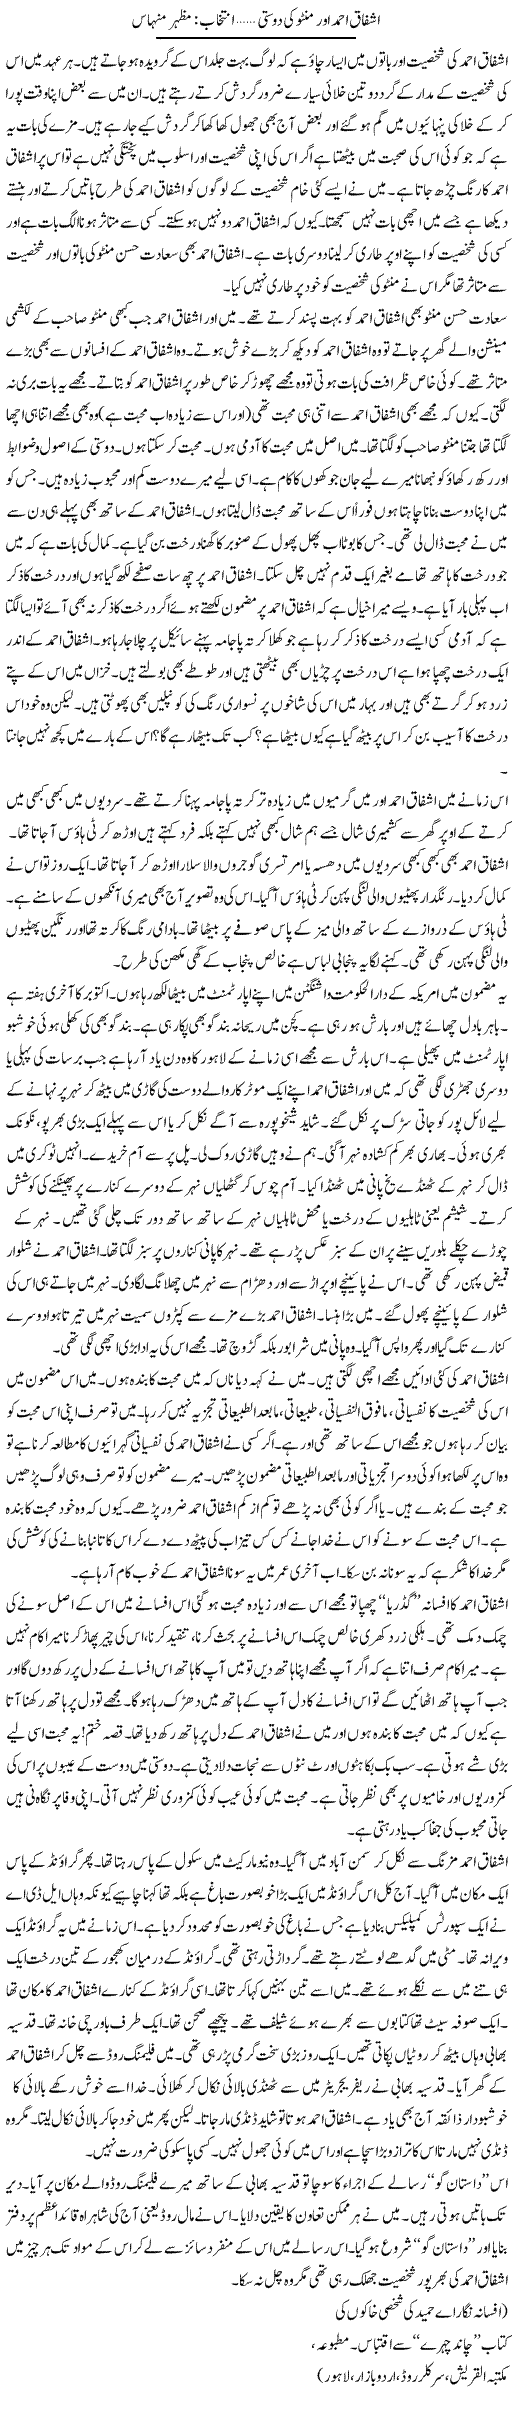 Ashfaq Ahmad aur Manto ki dosti | Mazhar Minhas | Daily Urdu Columns